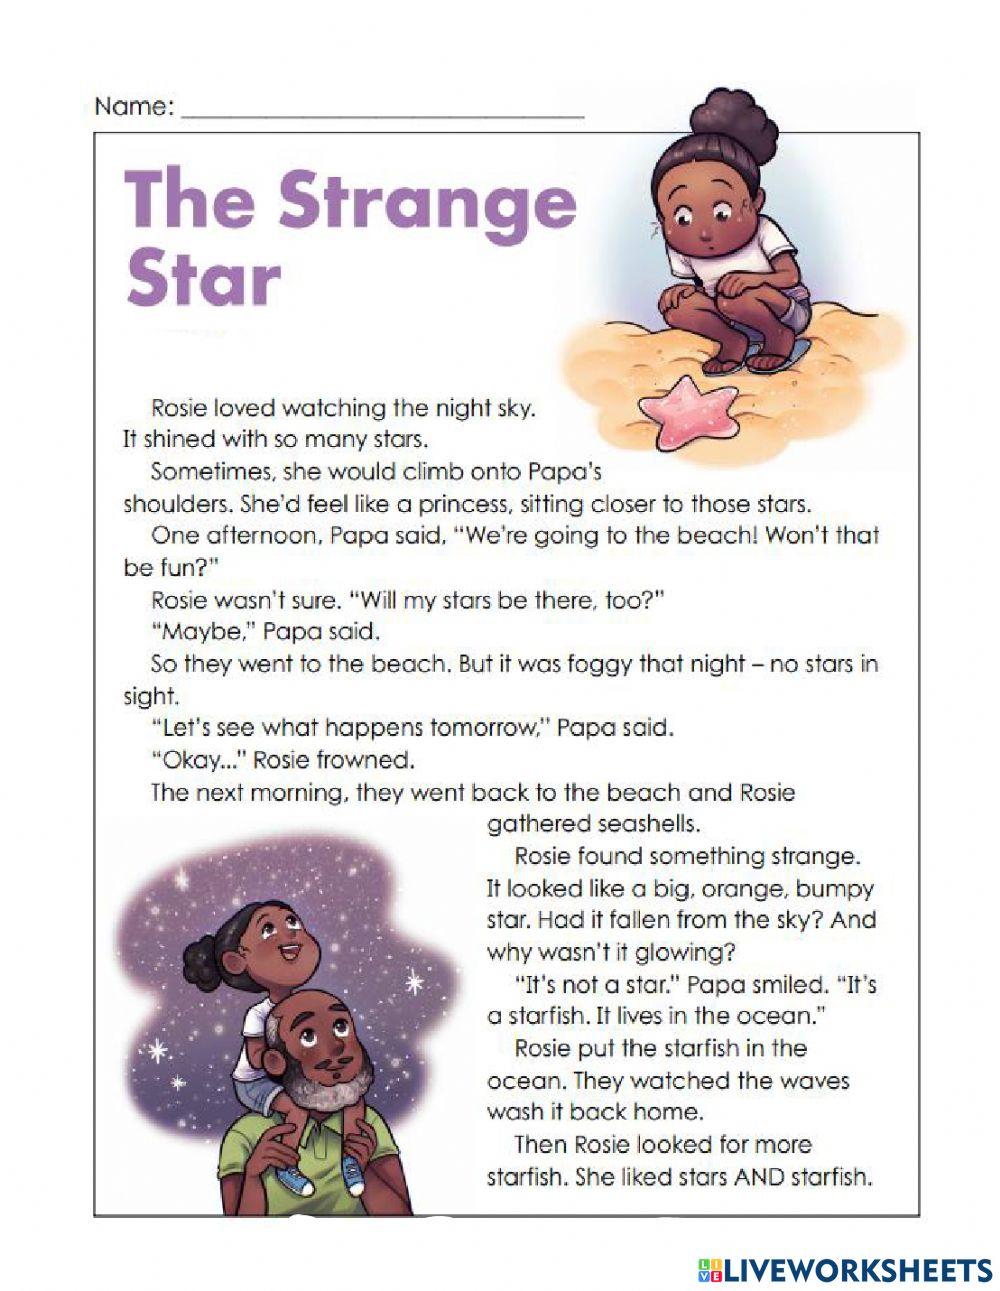 The Strange Star